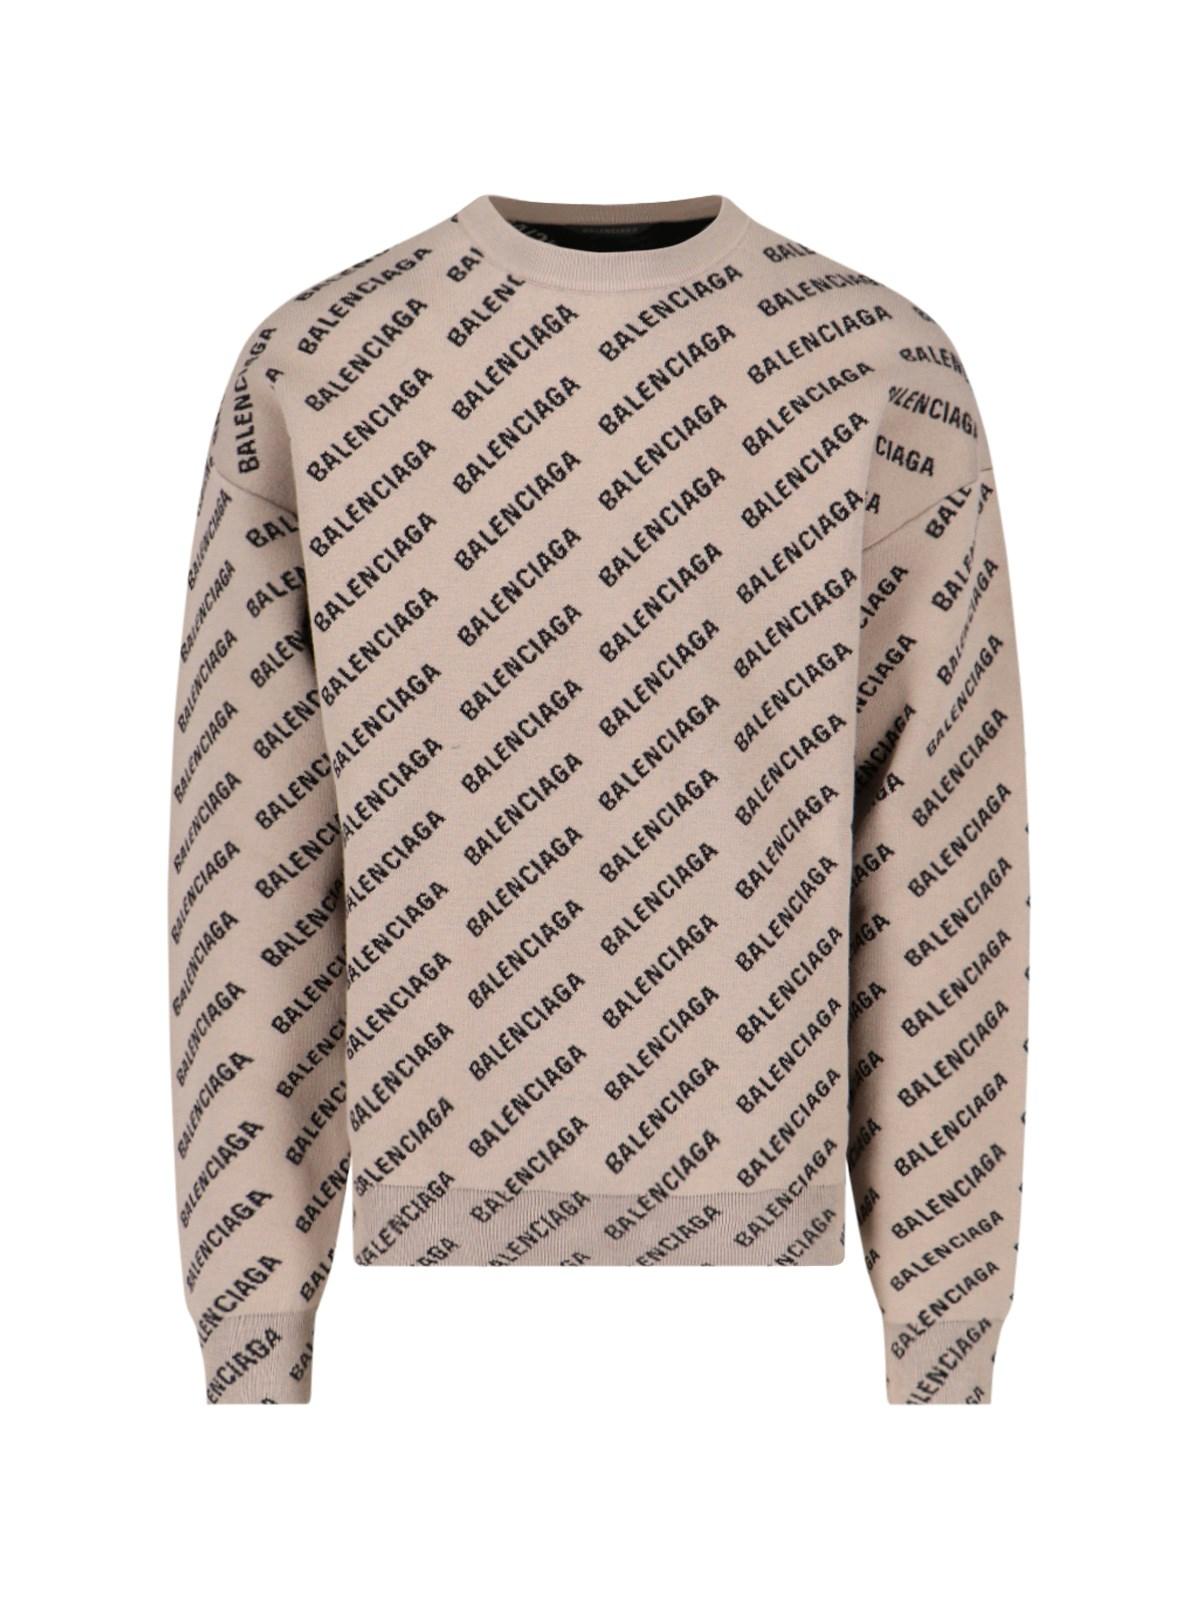 Balenciaga Logo Sweater in Natural for Men | Lyst